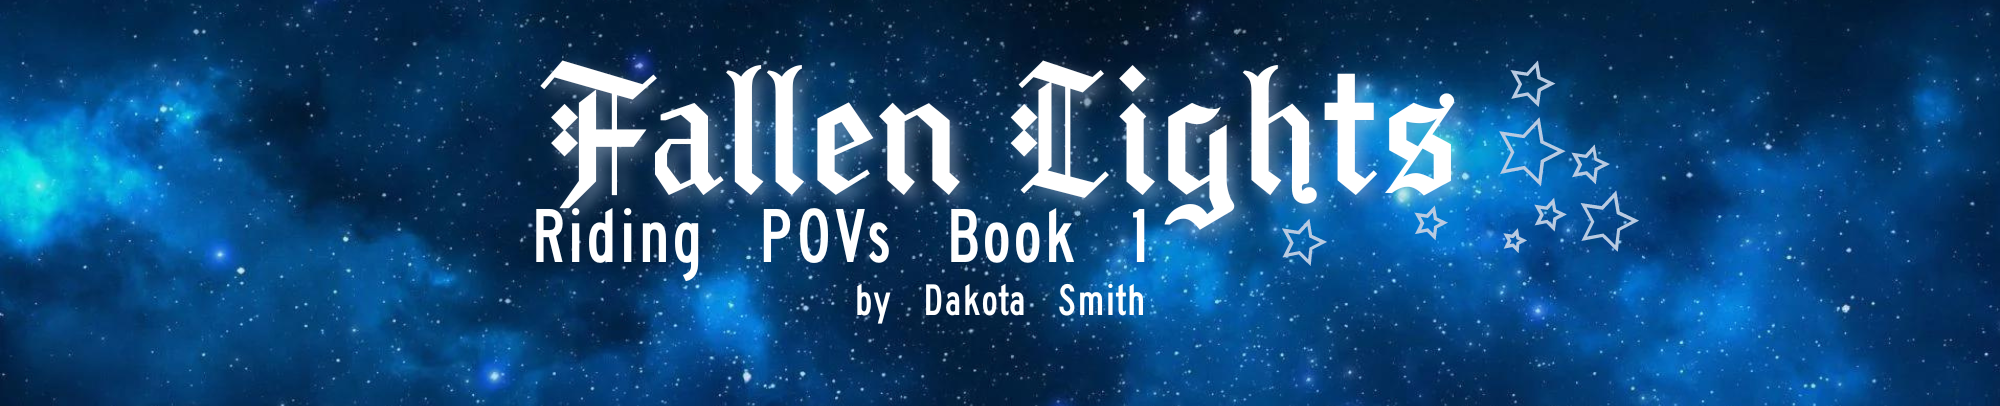 Fallen Lights Riding POVs: Book 1